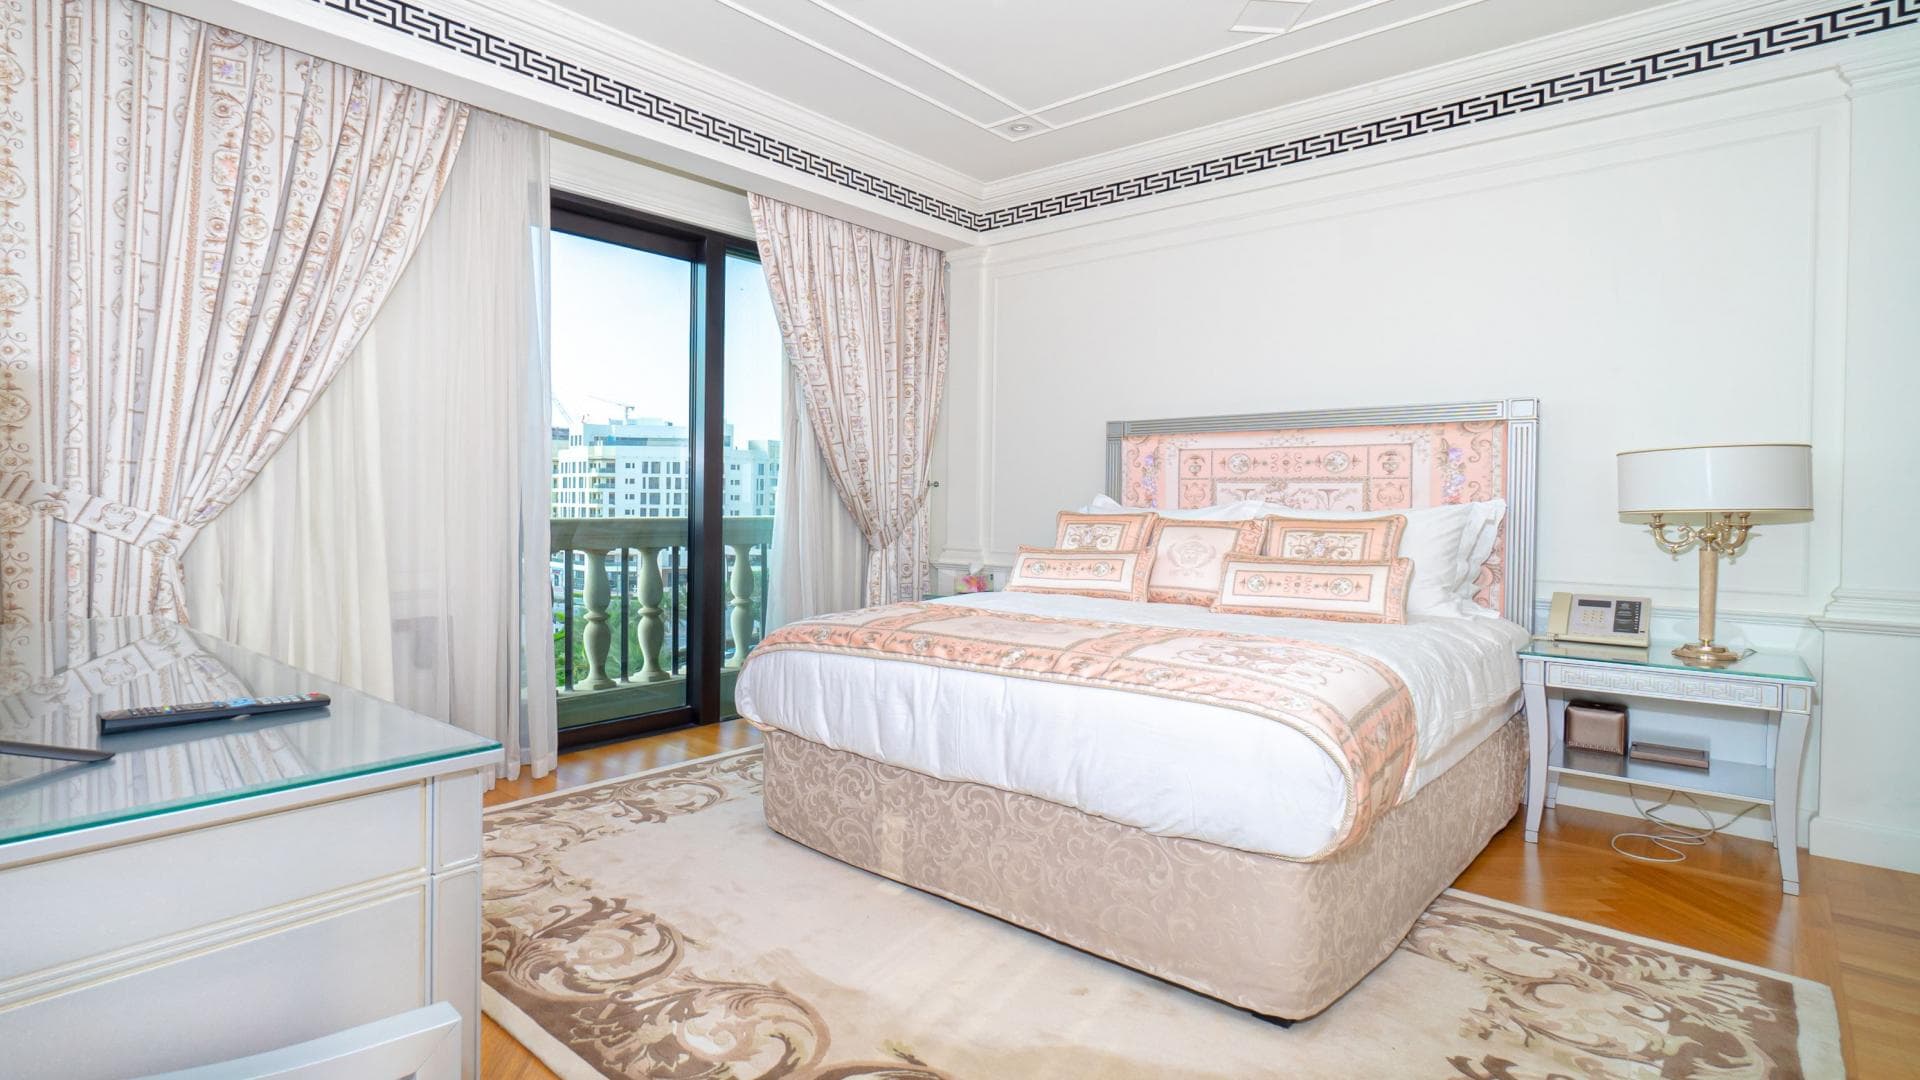 2 Bedroom Apartment For Rent Sadaf 7 Lp36800 2bd1fe4edab16800.jpeg